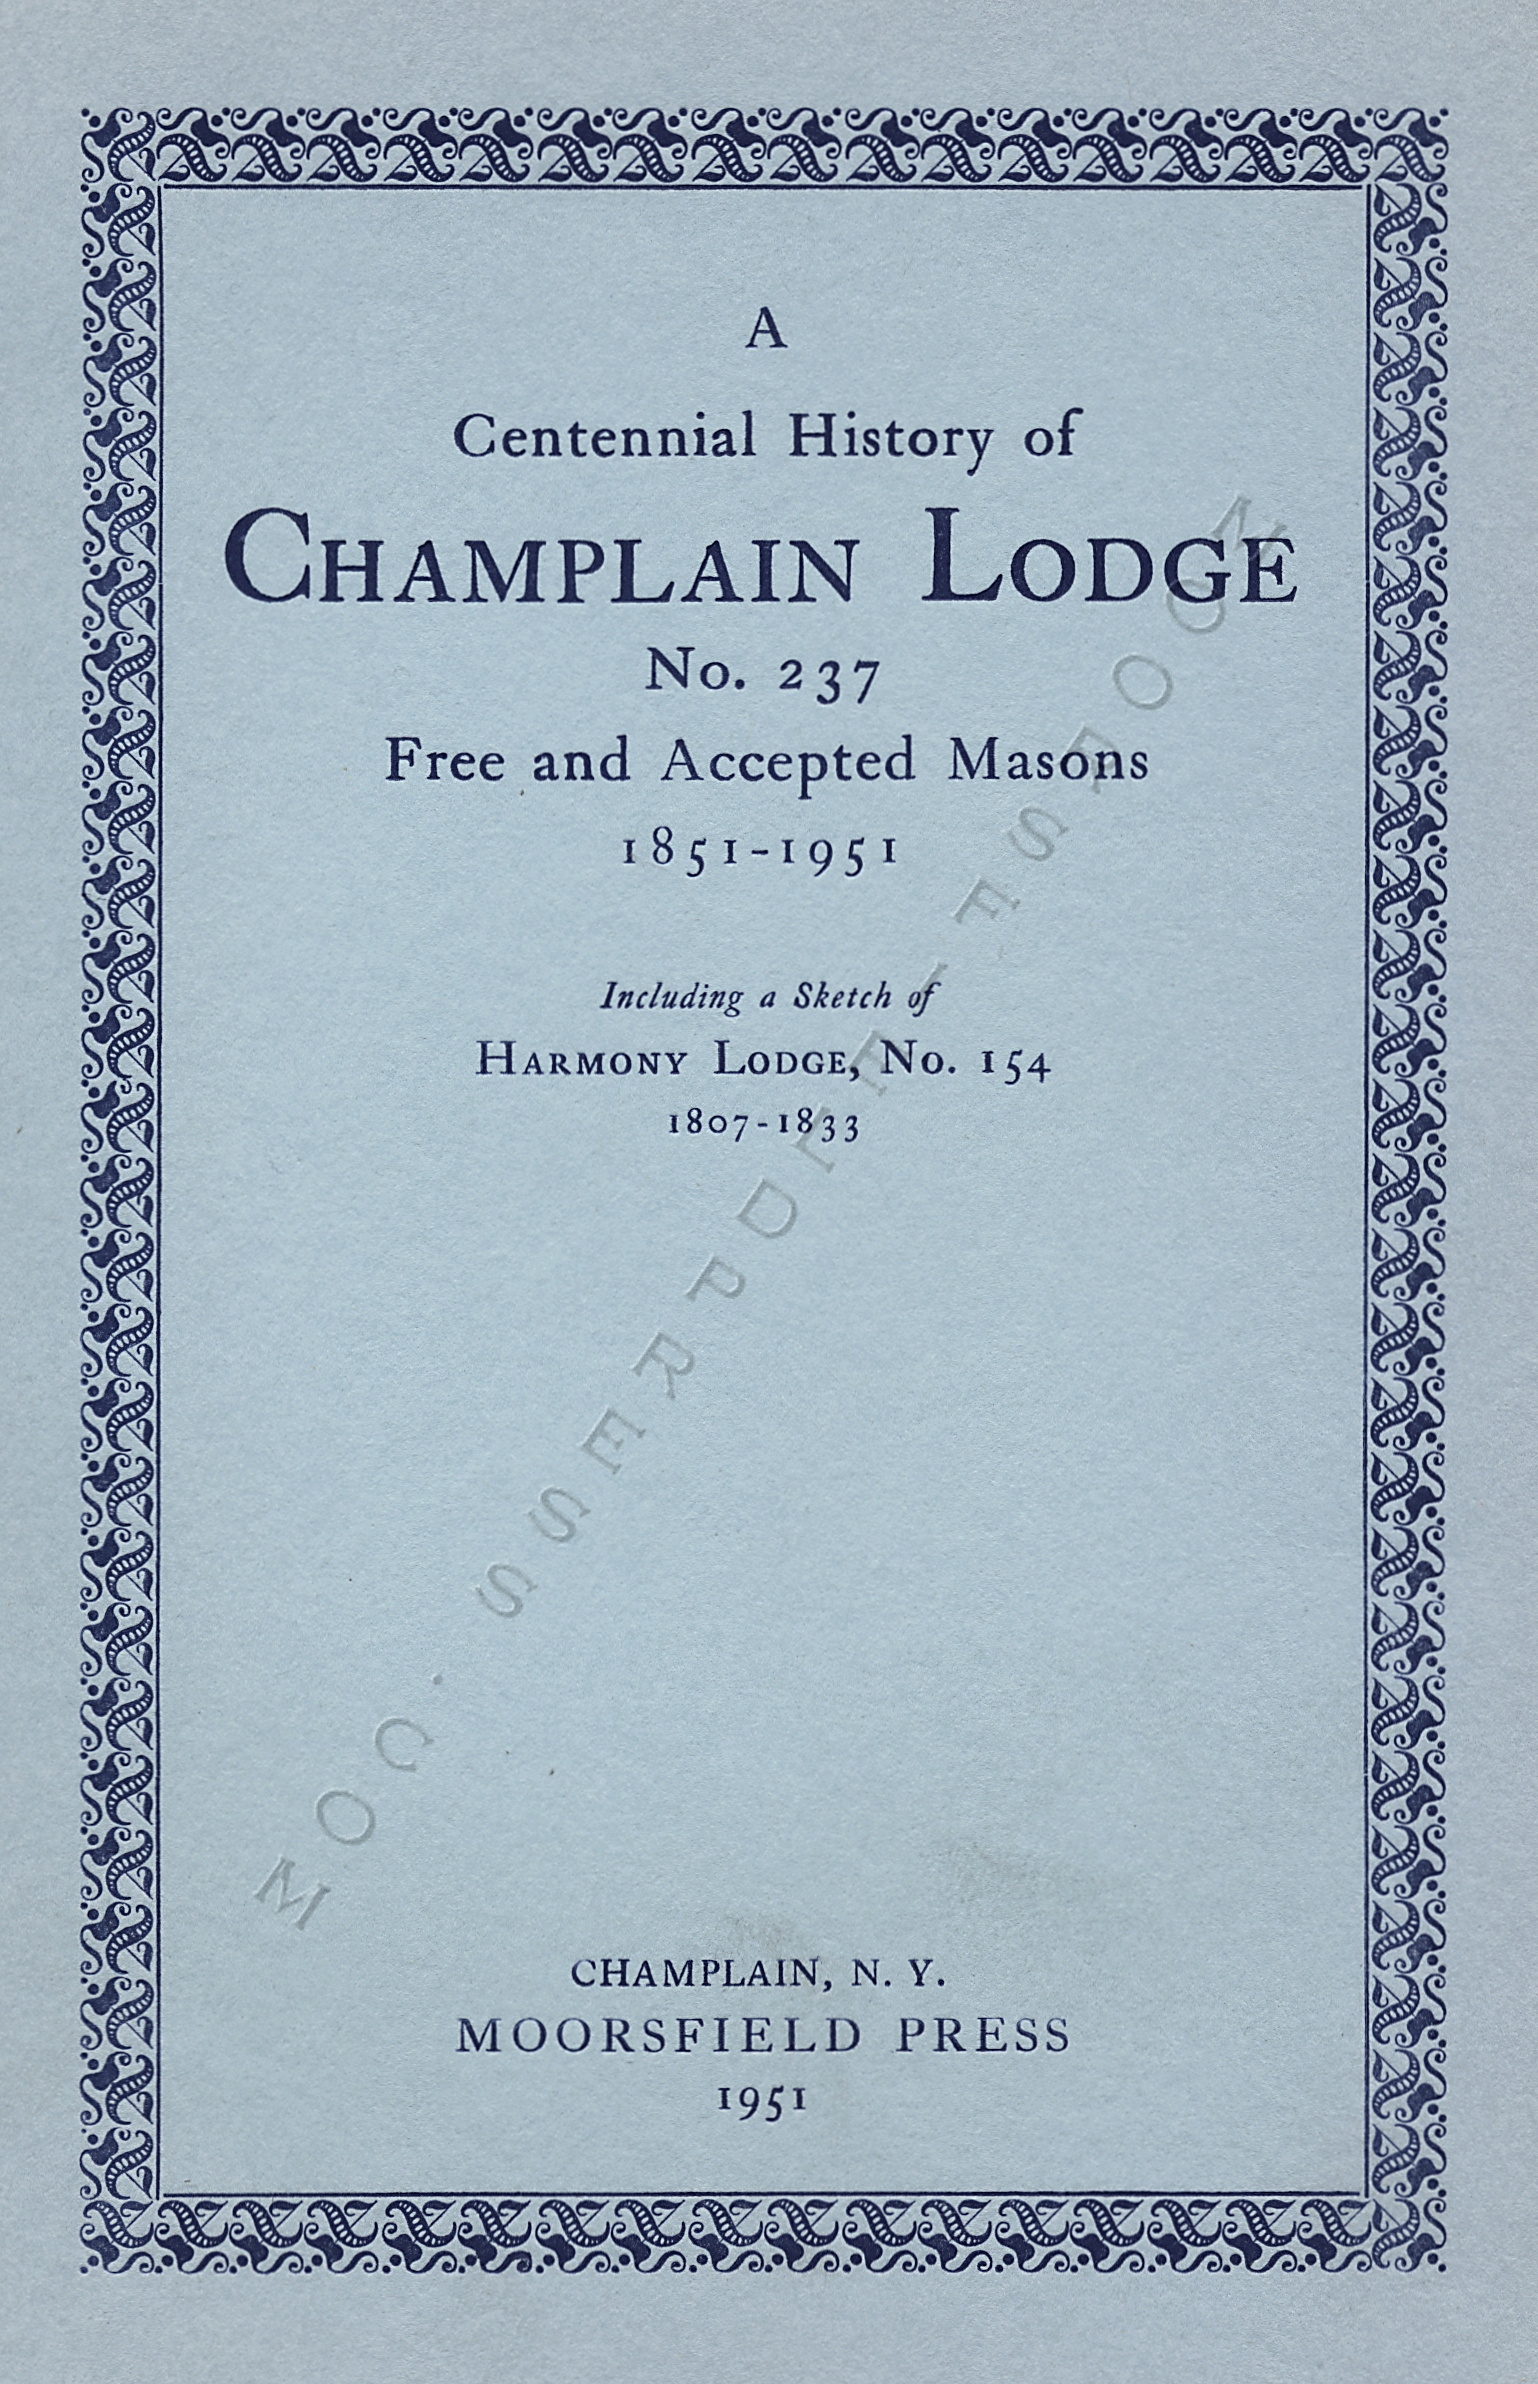 a_centennial_history_of_champlain_masons
                                lodge_1951